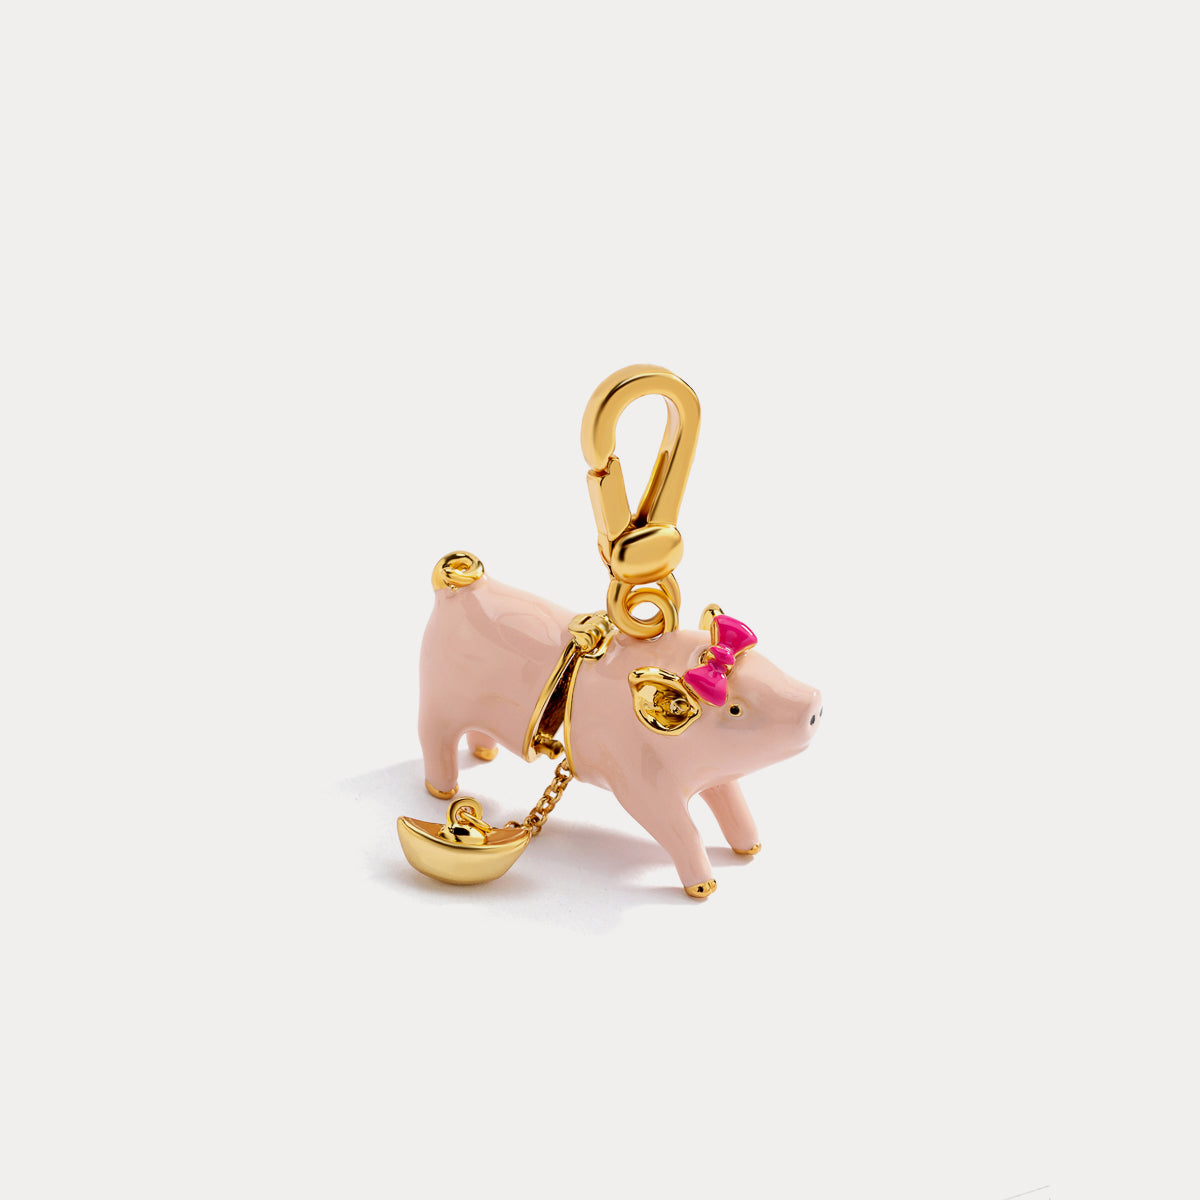 Selenichast pink pig pendant necklace